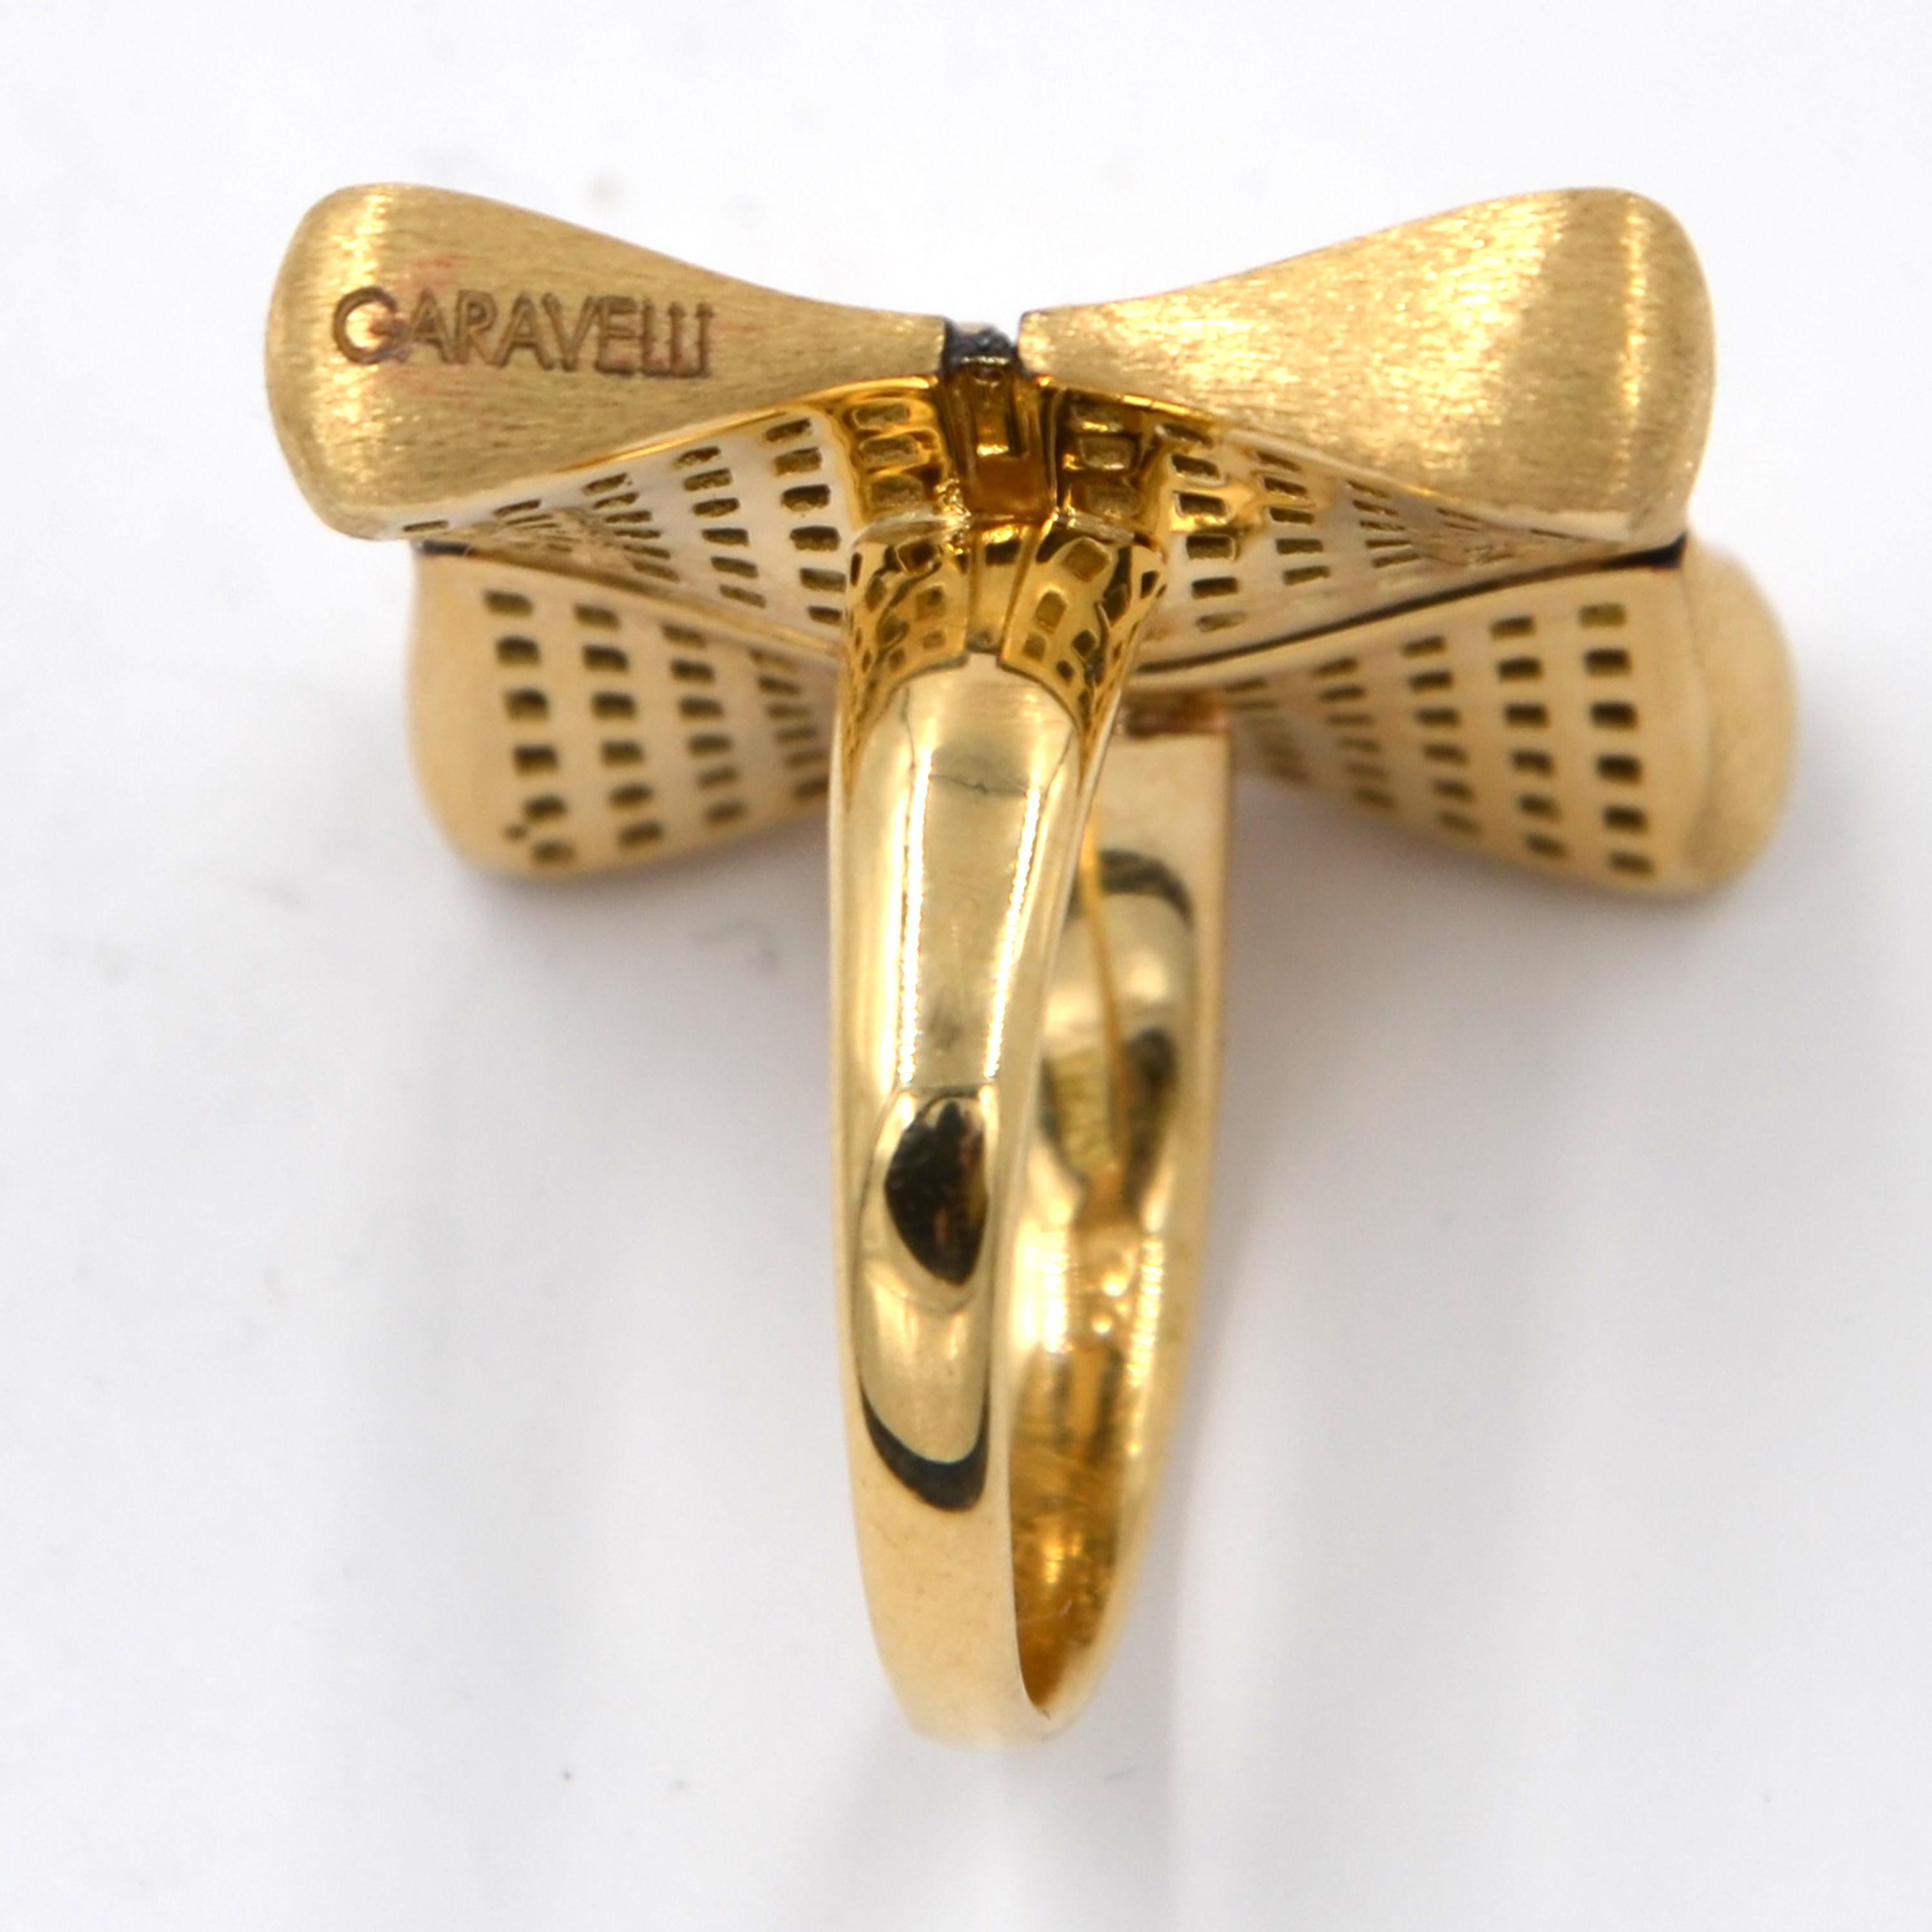 Contemporary Garavelli 18 Karat Yellow Gold White Diamonds Award Collection Ring